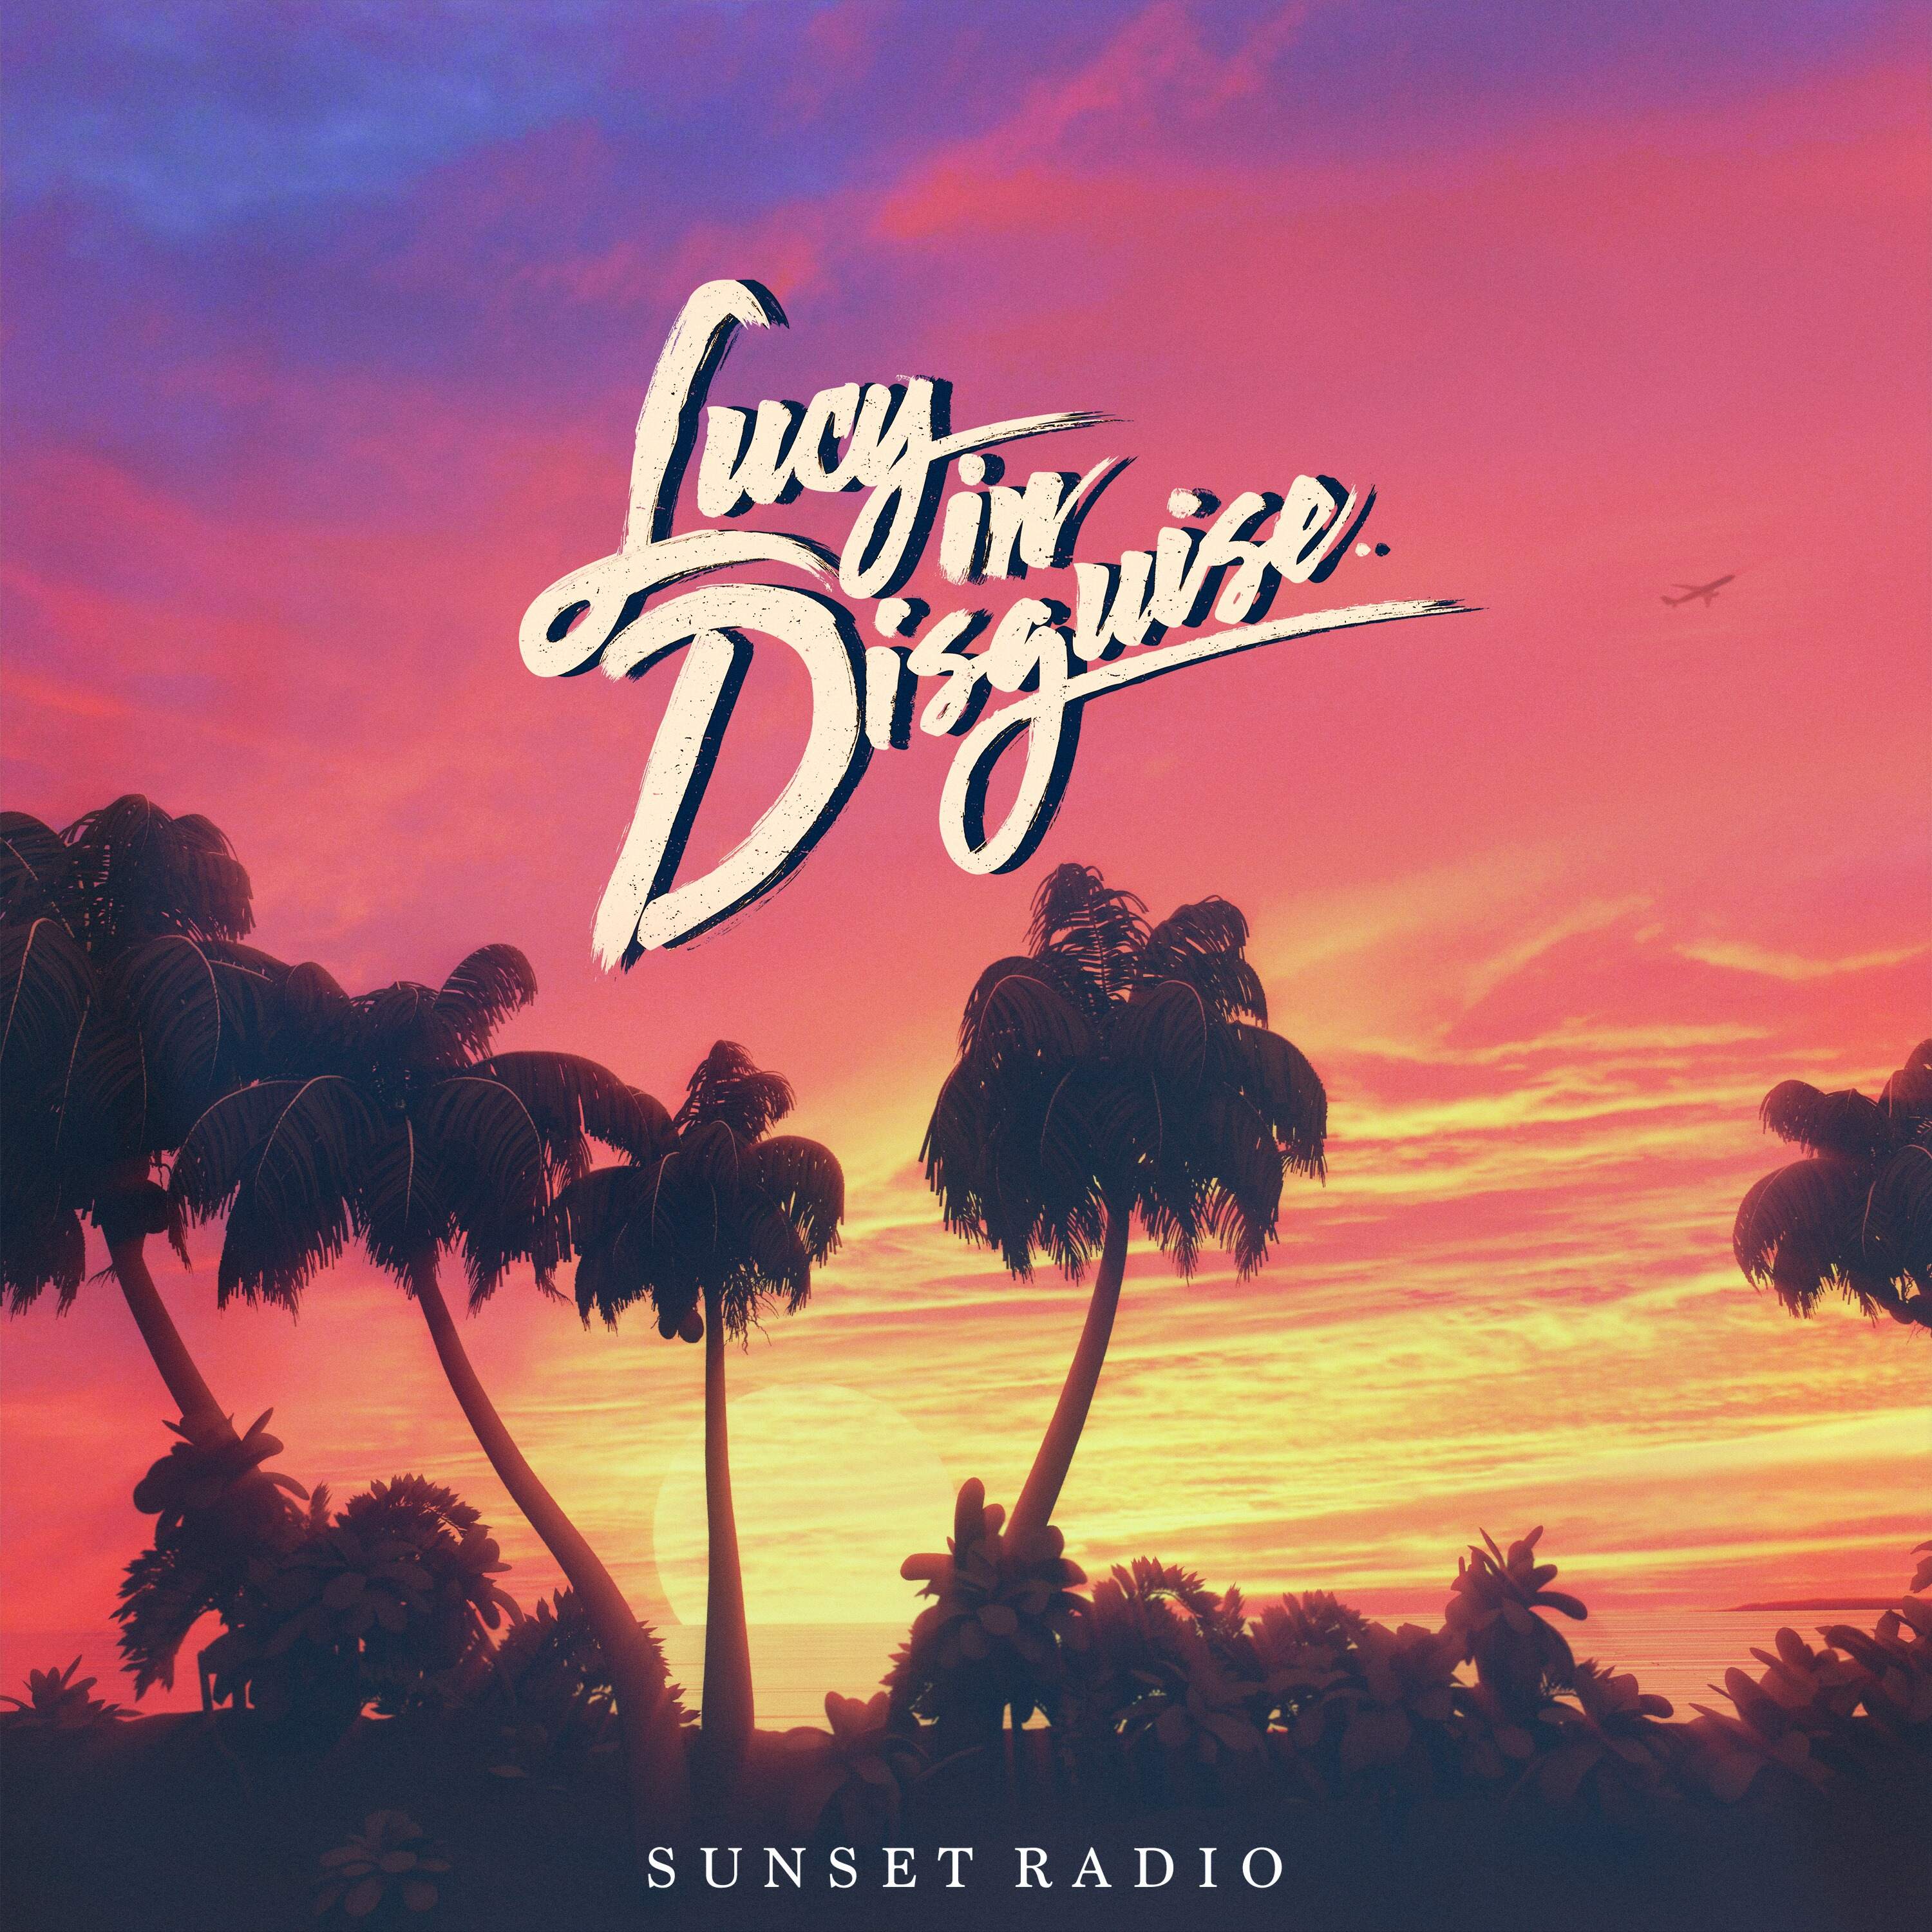 Lucy in Disguise Sunset Radio Album